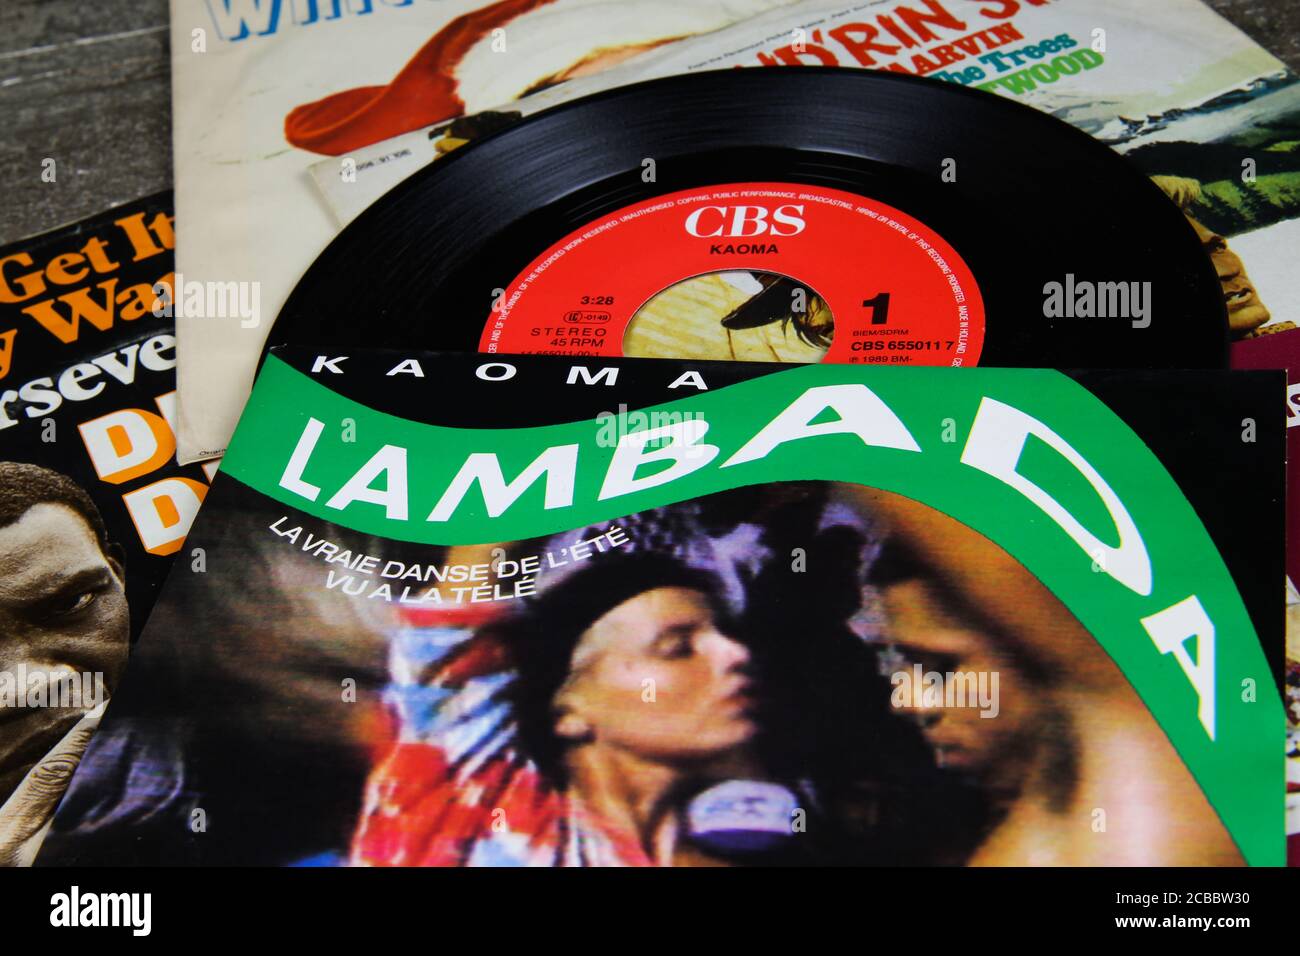 Viersen, Deutschland - 9. Juli. 2020: Nahaufnahme des isolierten Kaoma Lambada Single Vinyl Plattencovers von 1989 Stockfoto